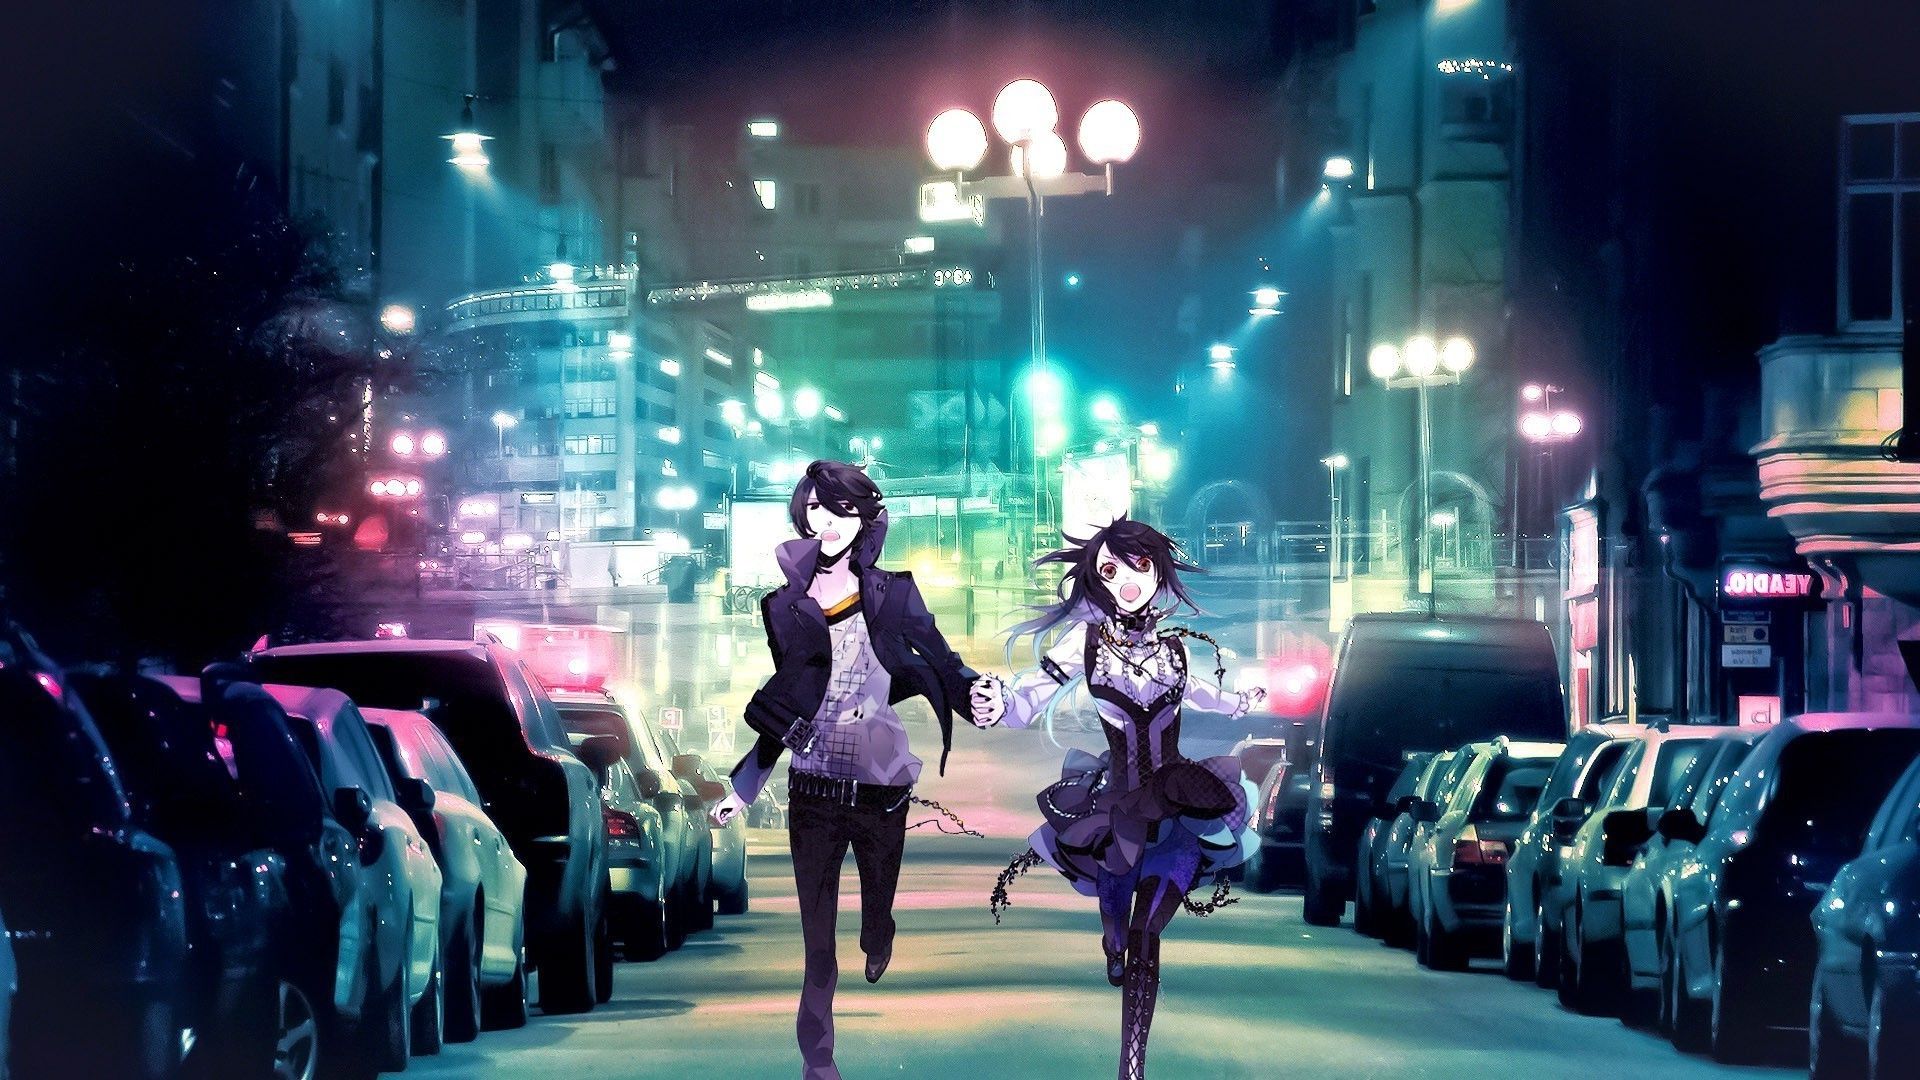 1920x1080 fantasy art anime city street lights colorful wallpaper JPG 526 kB